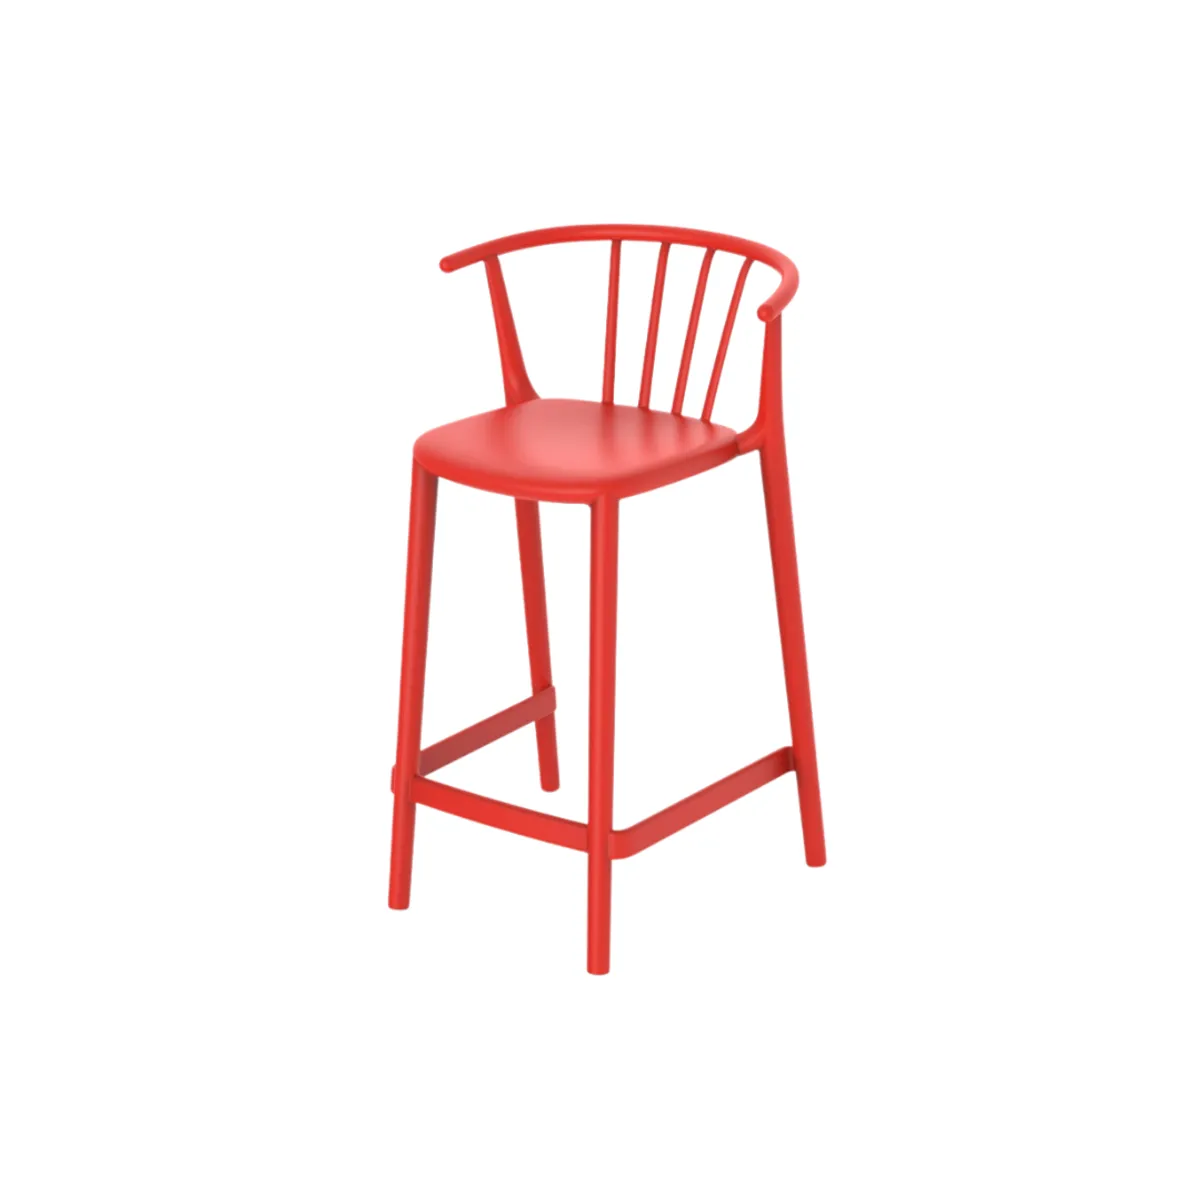 Maple bar stool 1